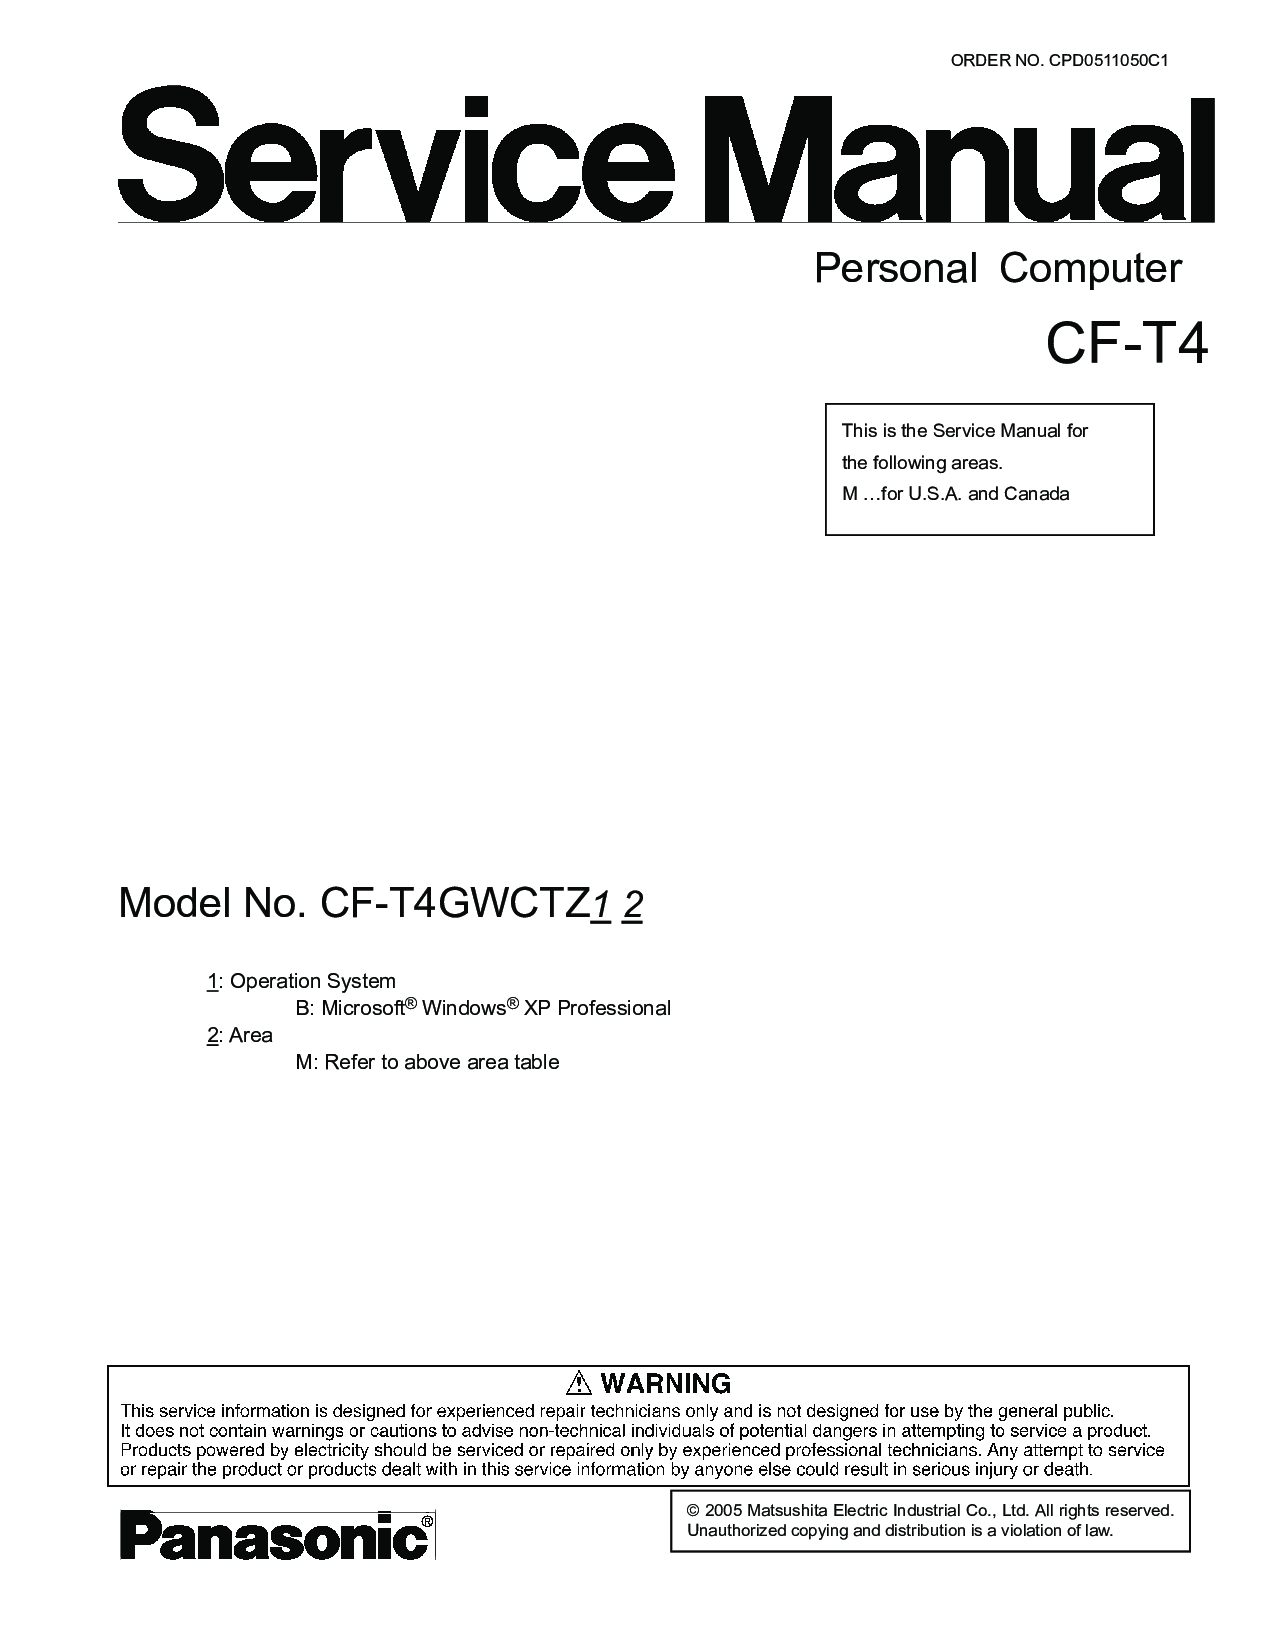 Panasonic CF-T4GWCTZBM Service Manual